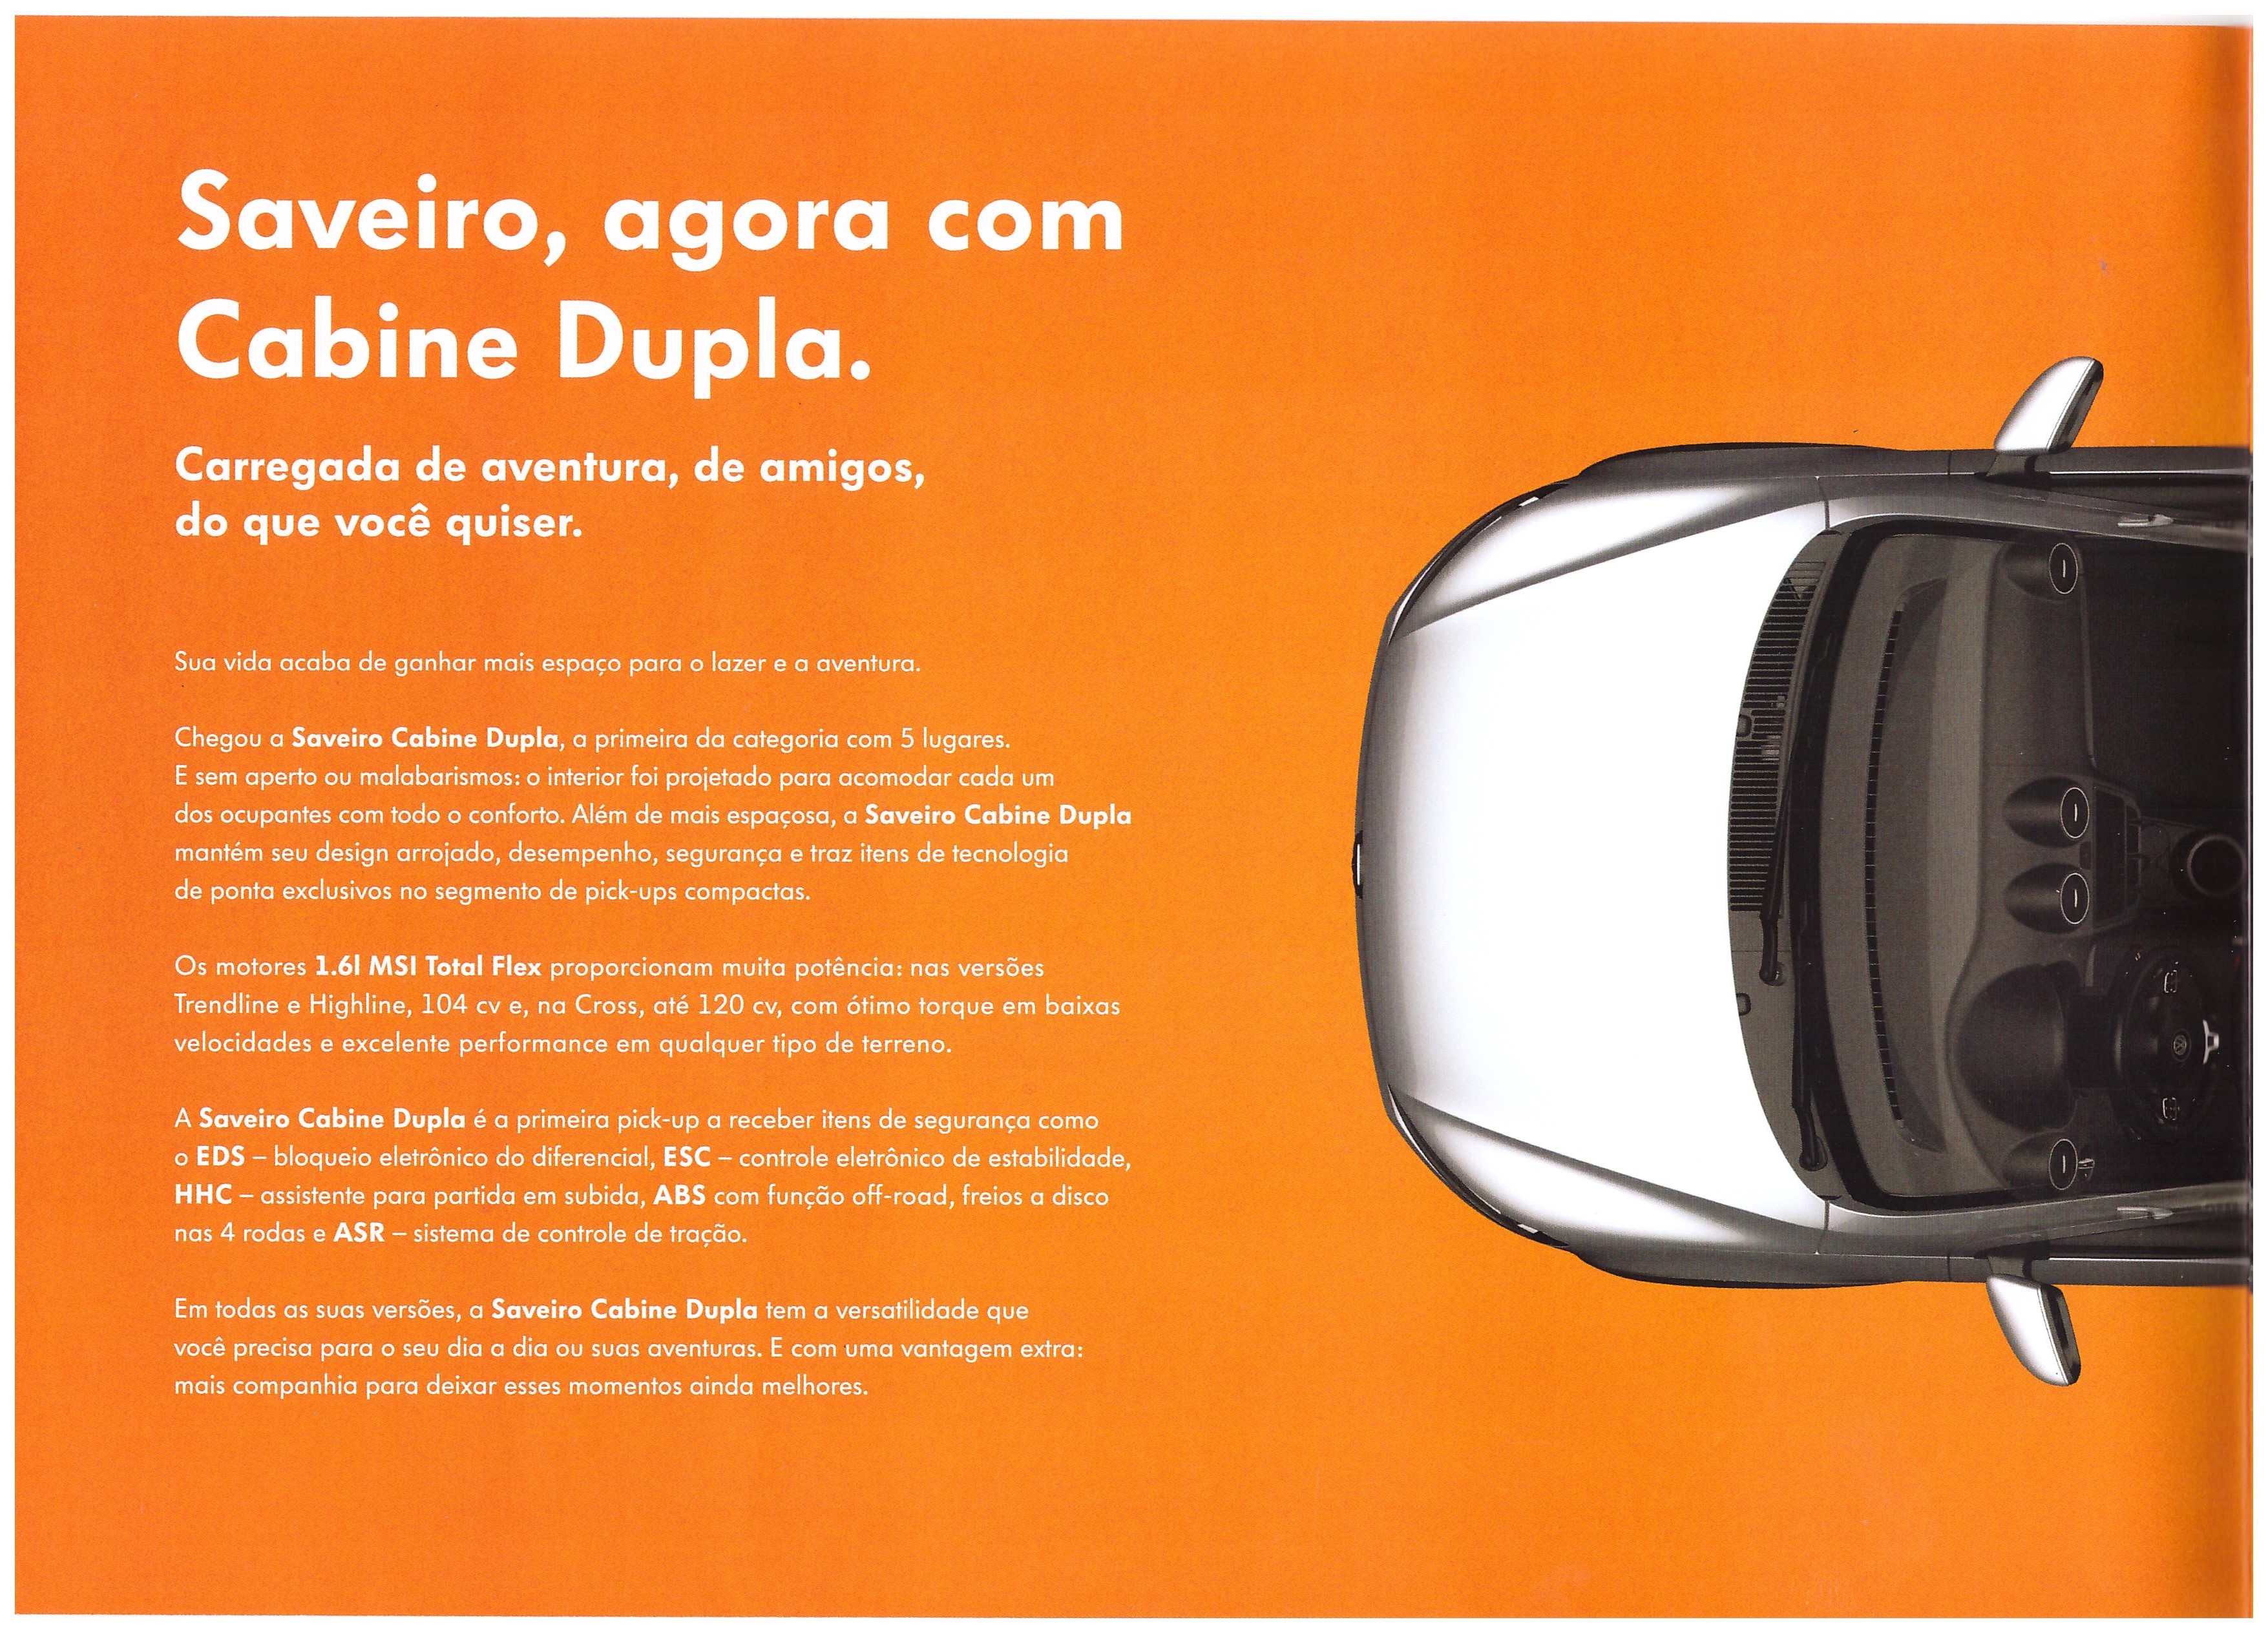 Capsule Review: 2015 VW Saveiro CD Highline (Double Cab - Brazilian Market)